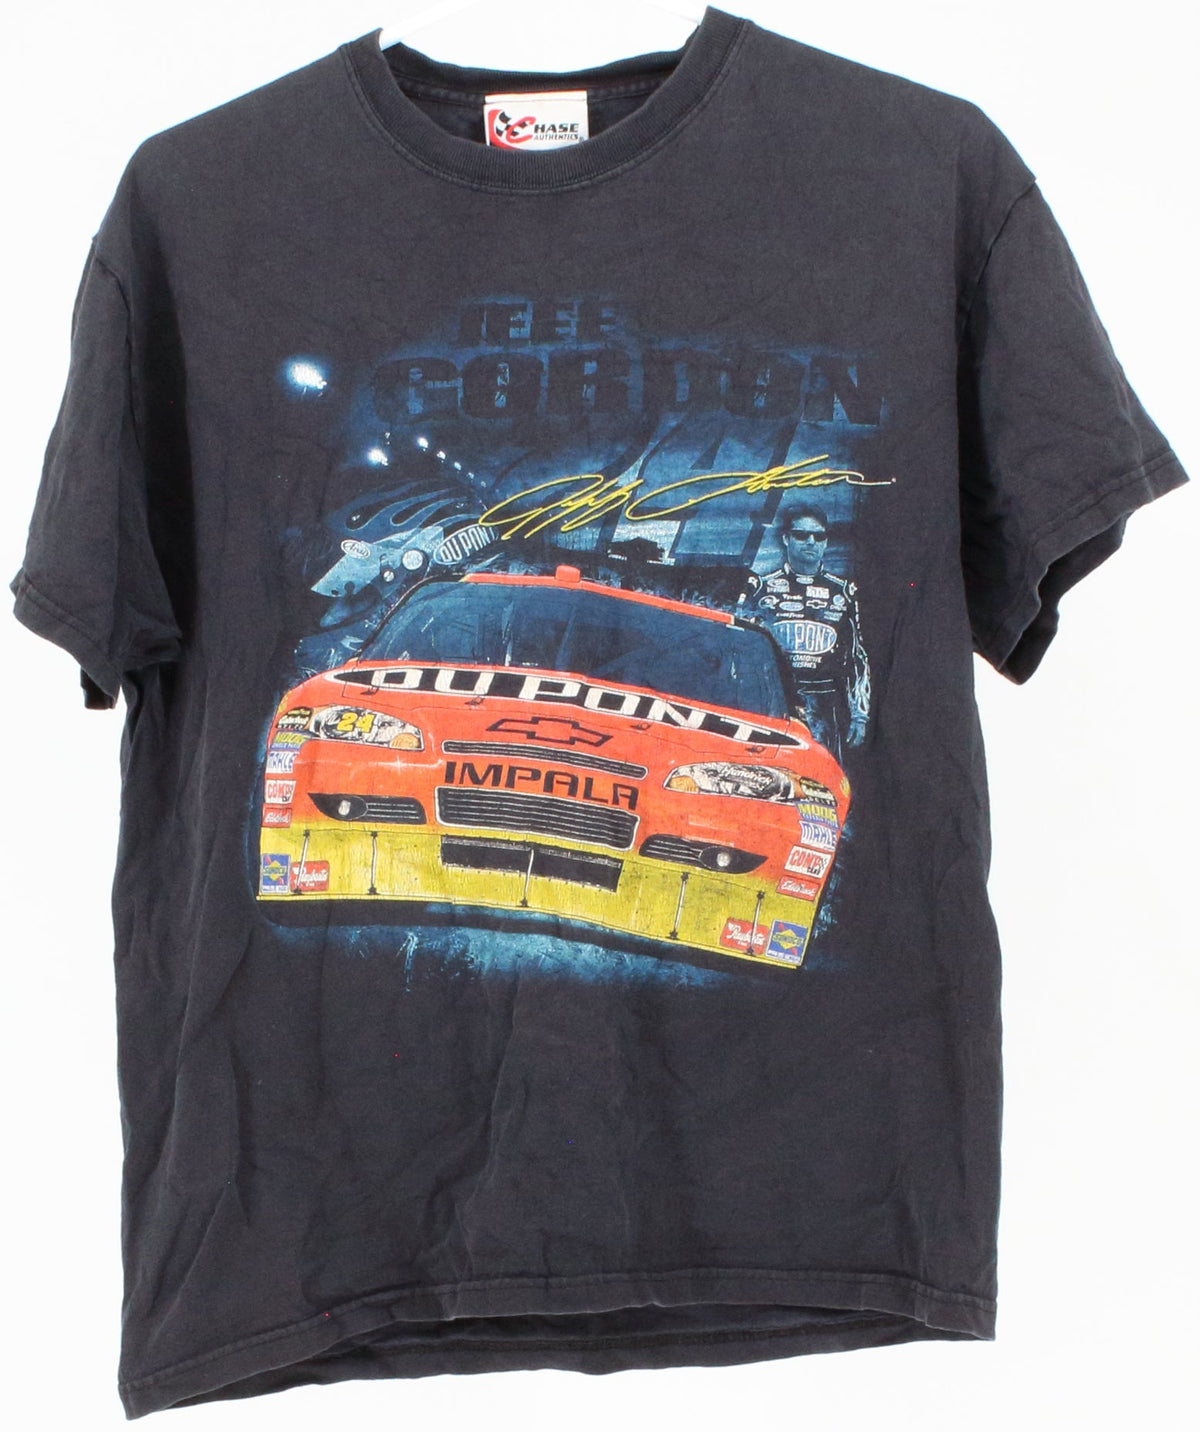 Chase Authentics Jeff Gordon Racing Black Graphic T-Shirt